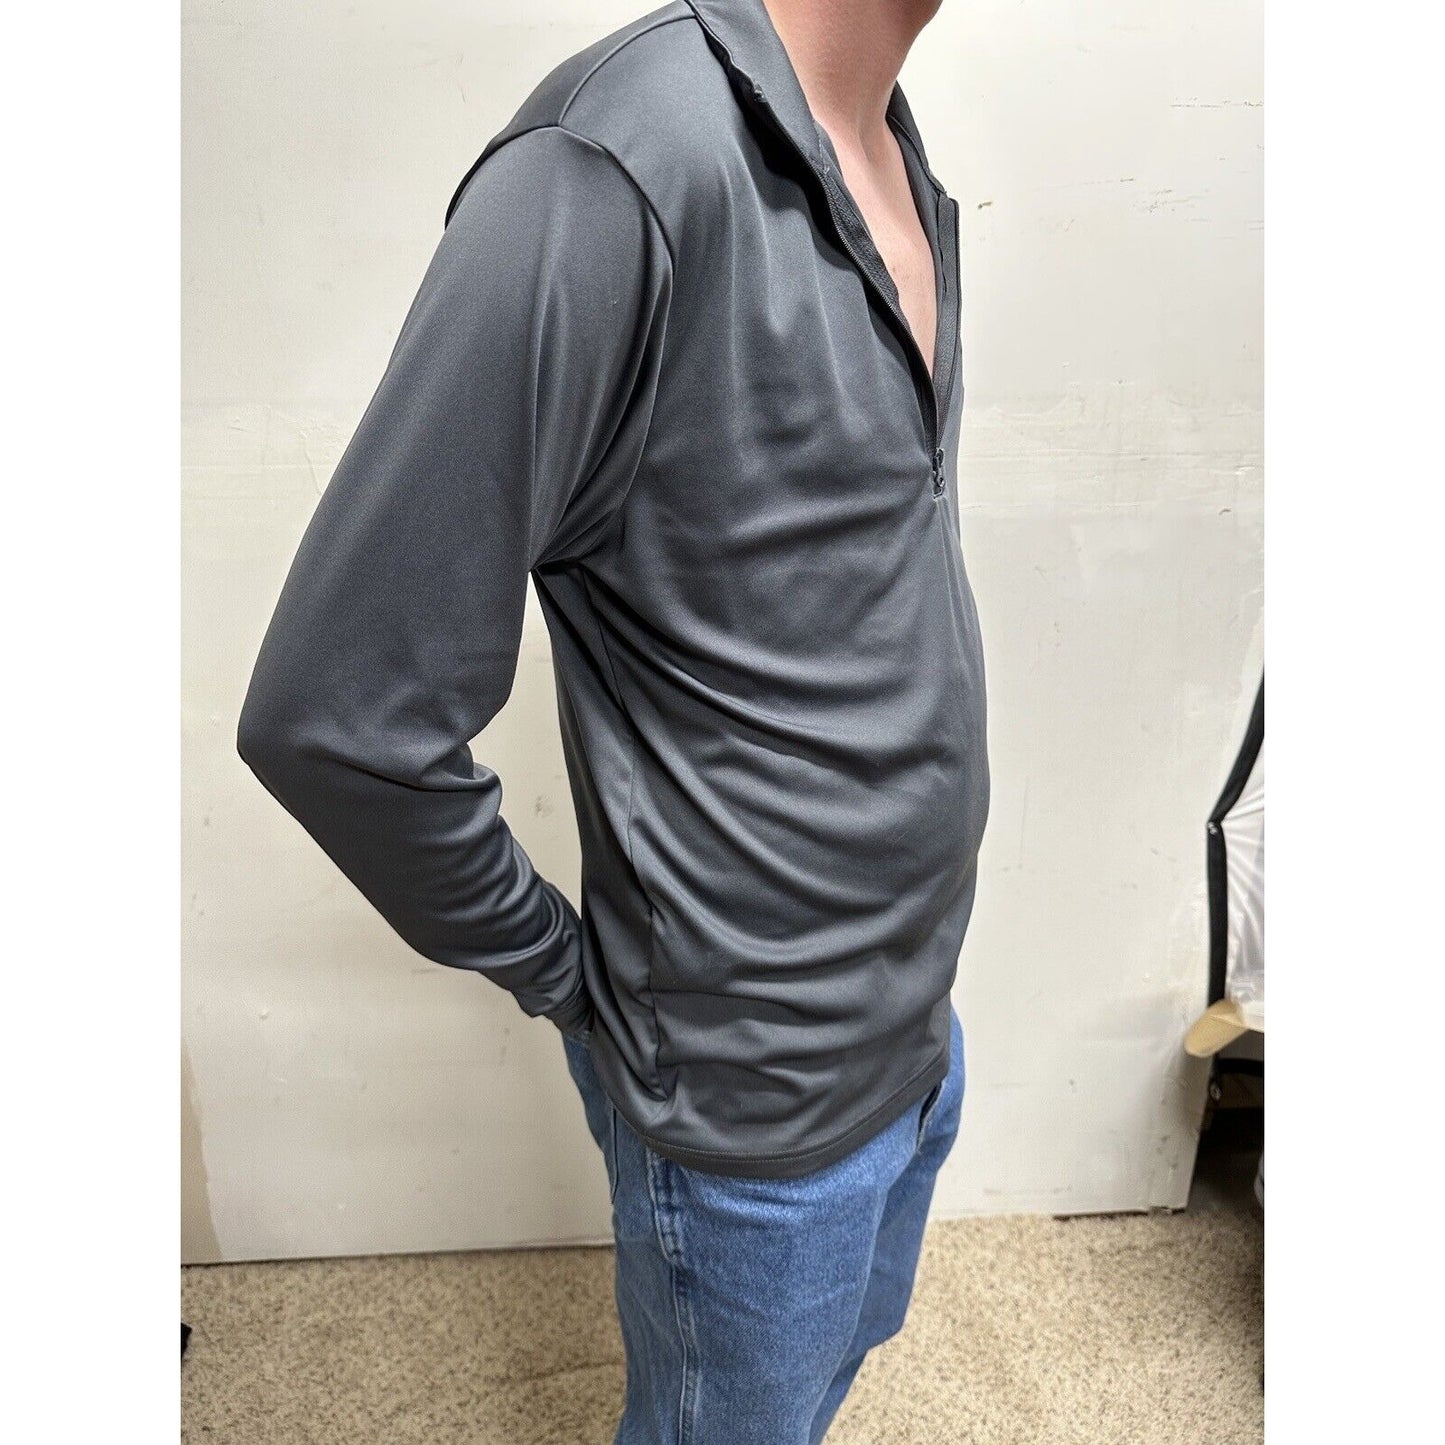 men’s gray dakota state trojans pull over long sleeve 1/4 zip shirt ~medium